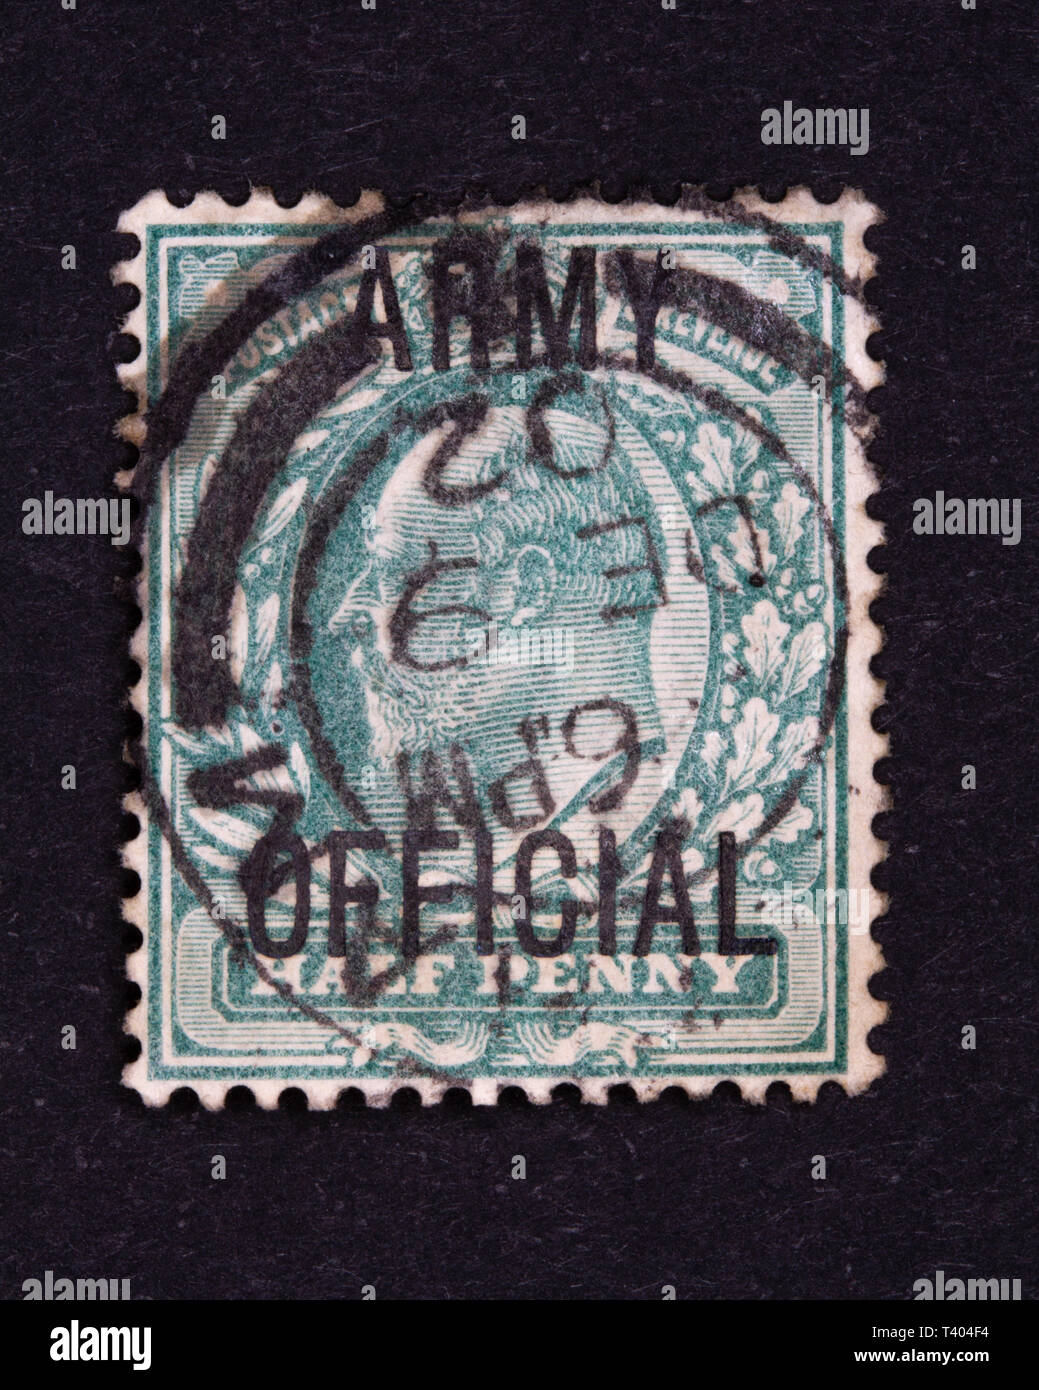 King Edward VII potsage stamp Stock Photo